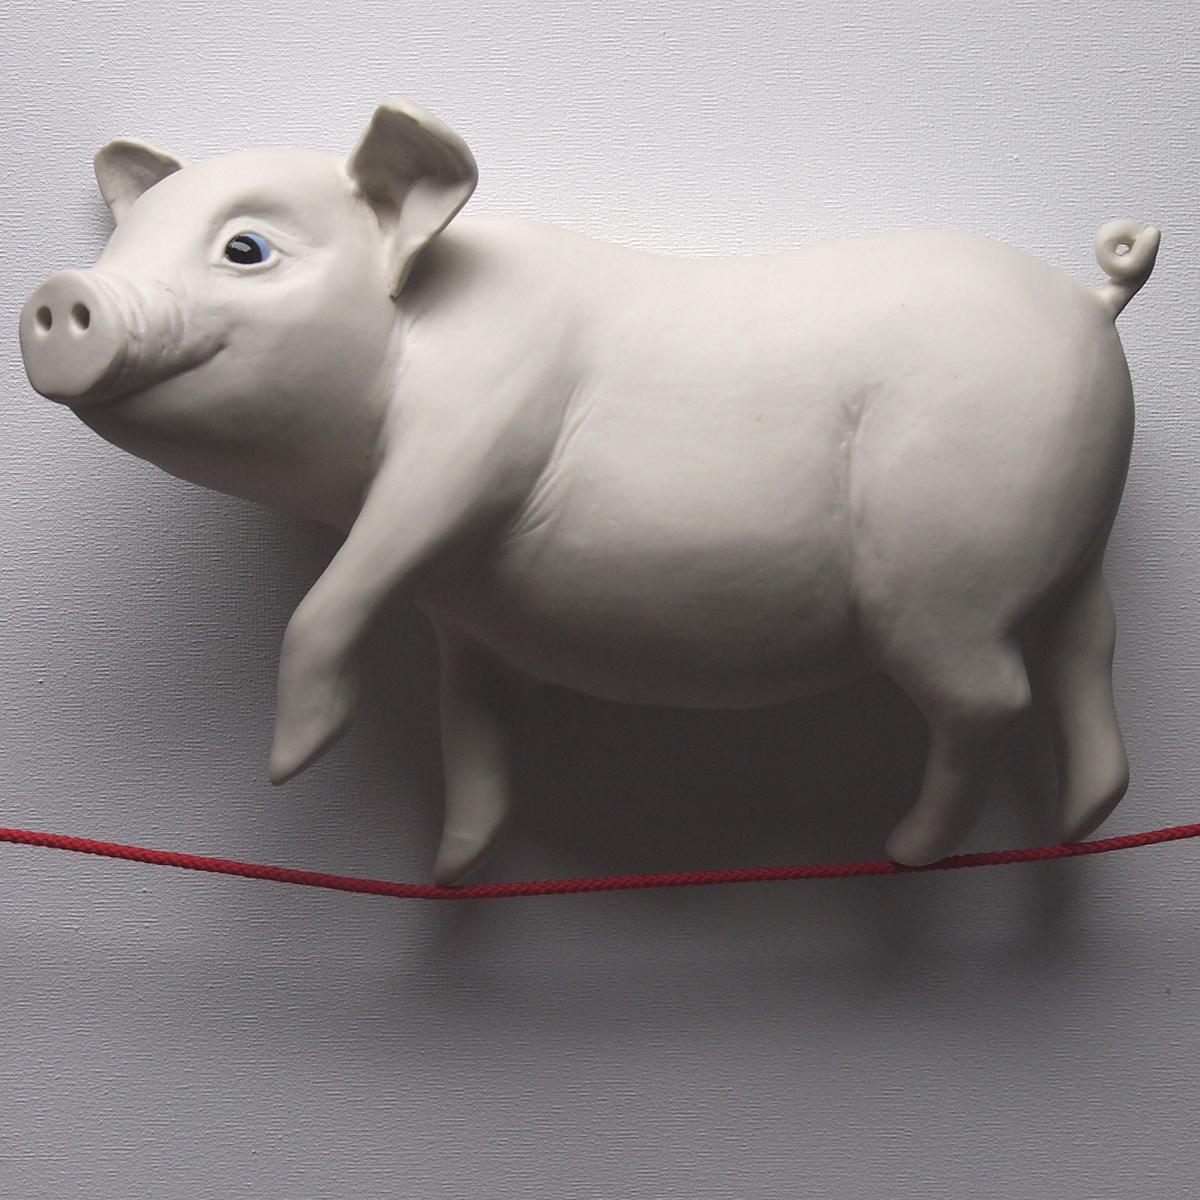 When Pigs Fly (White)-original realism wildlife sculpture-contemporary Artwork - Realist Sculpture by Henk Jan Sanderman